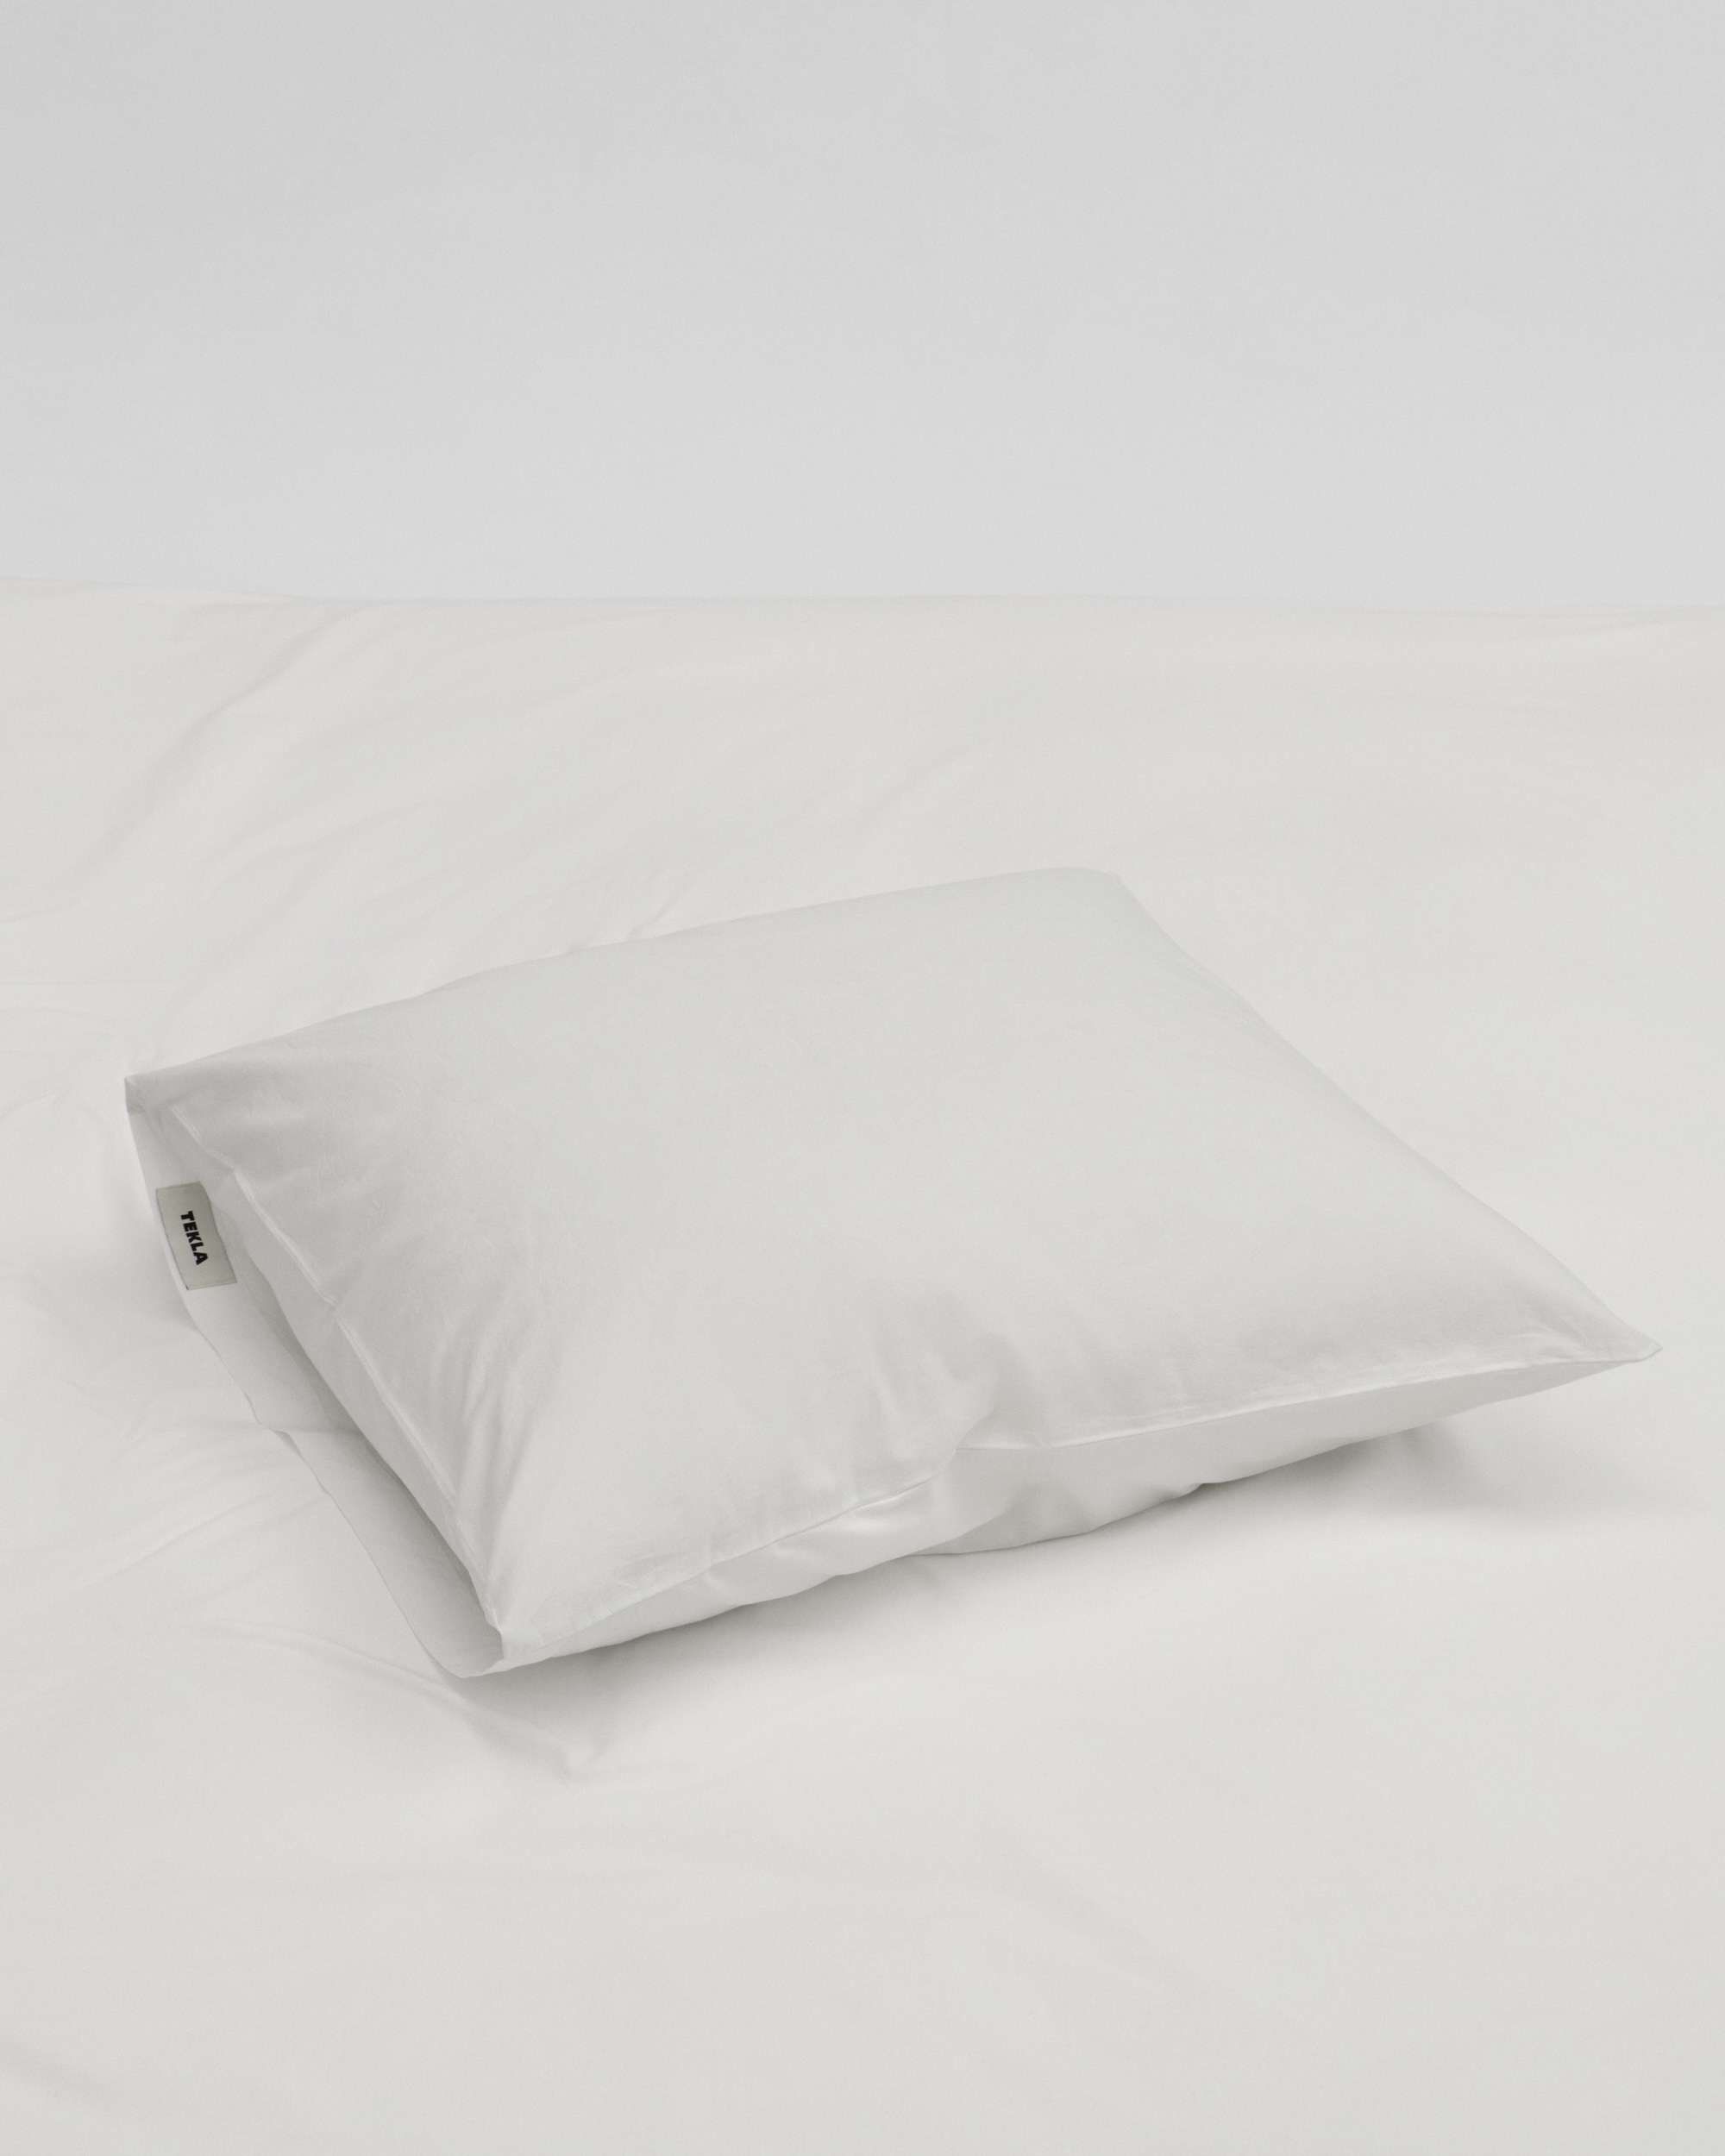 【2set】TEKLA Soft Grey pillow sham